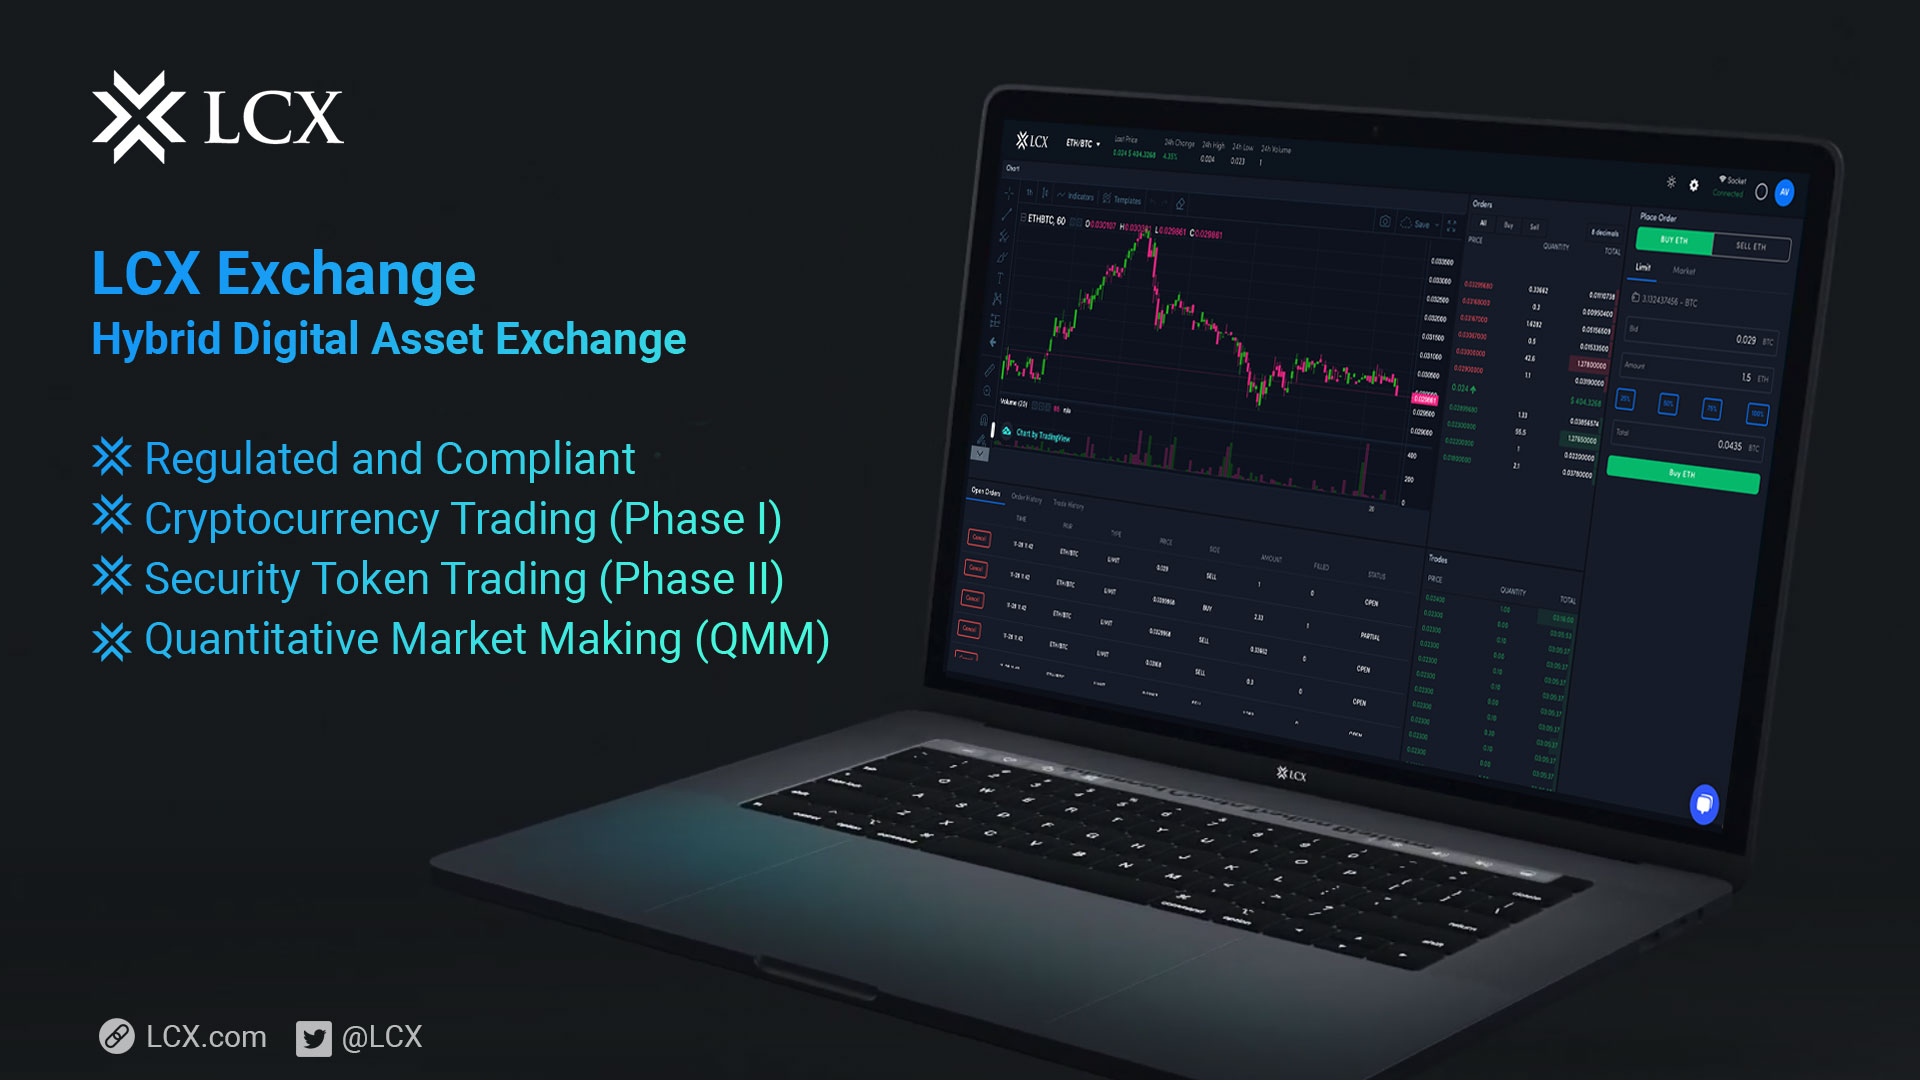 lcx announces fiat-to-crypto exchange for crypto investors xrp